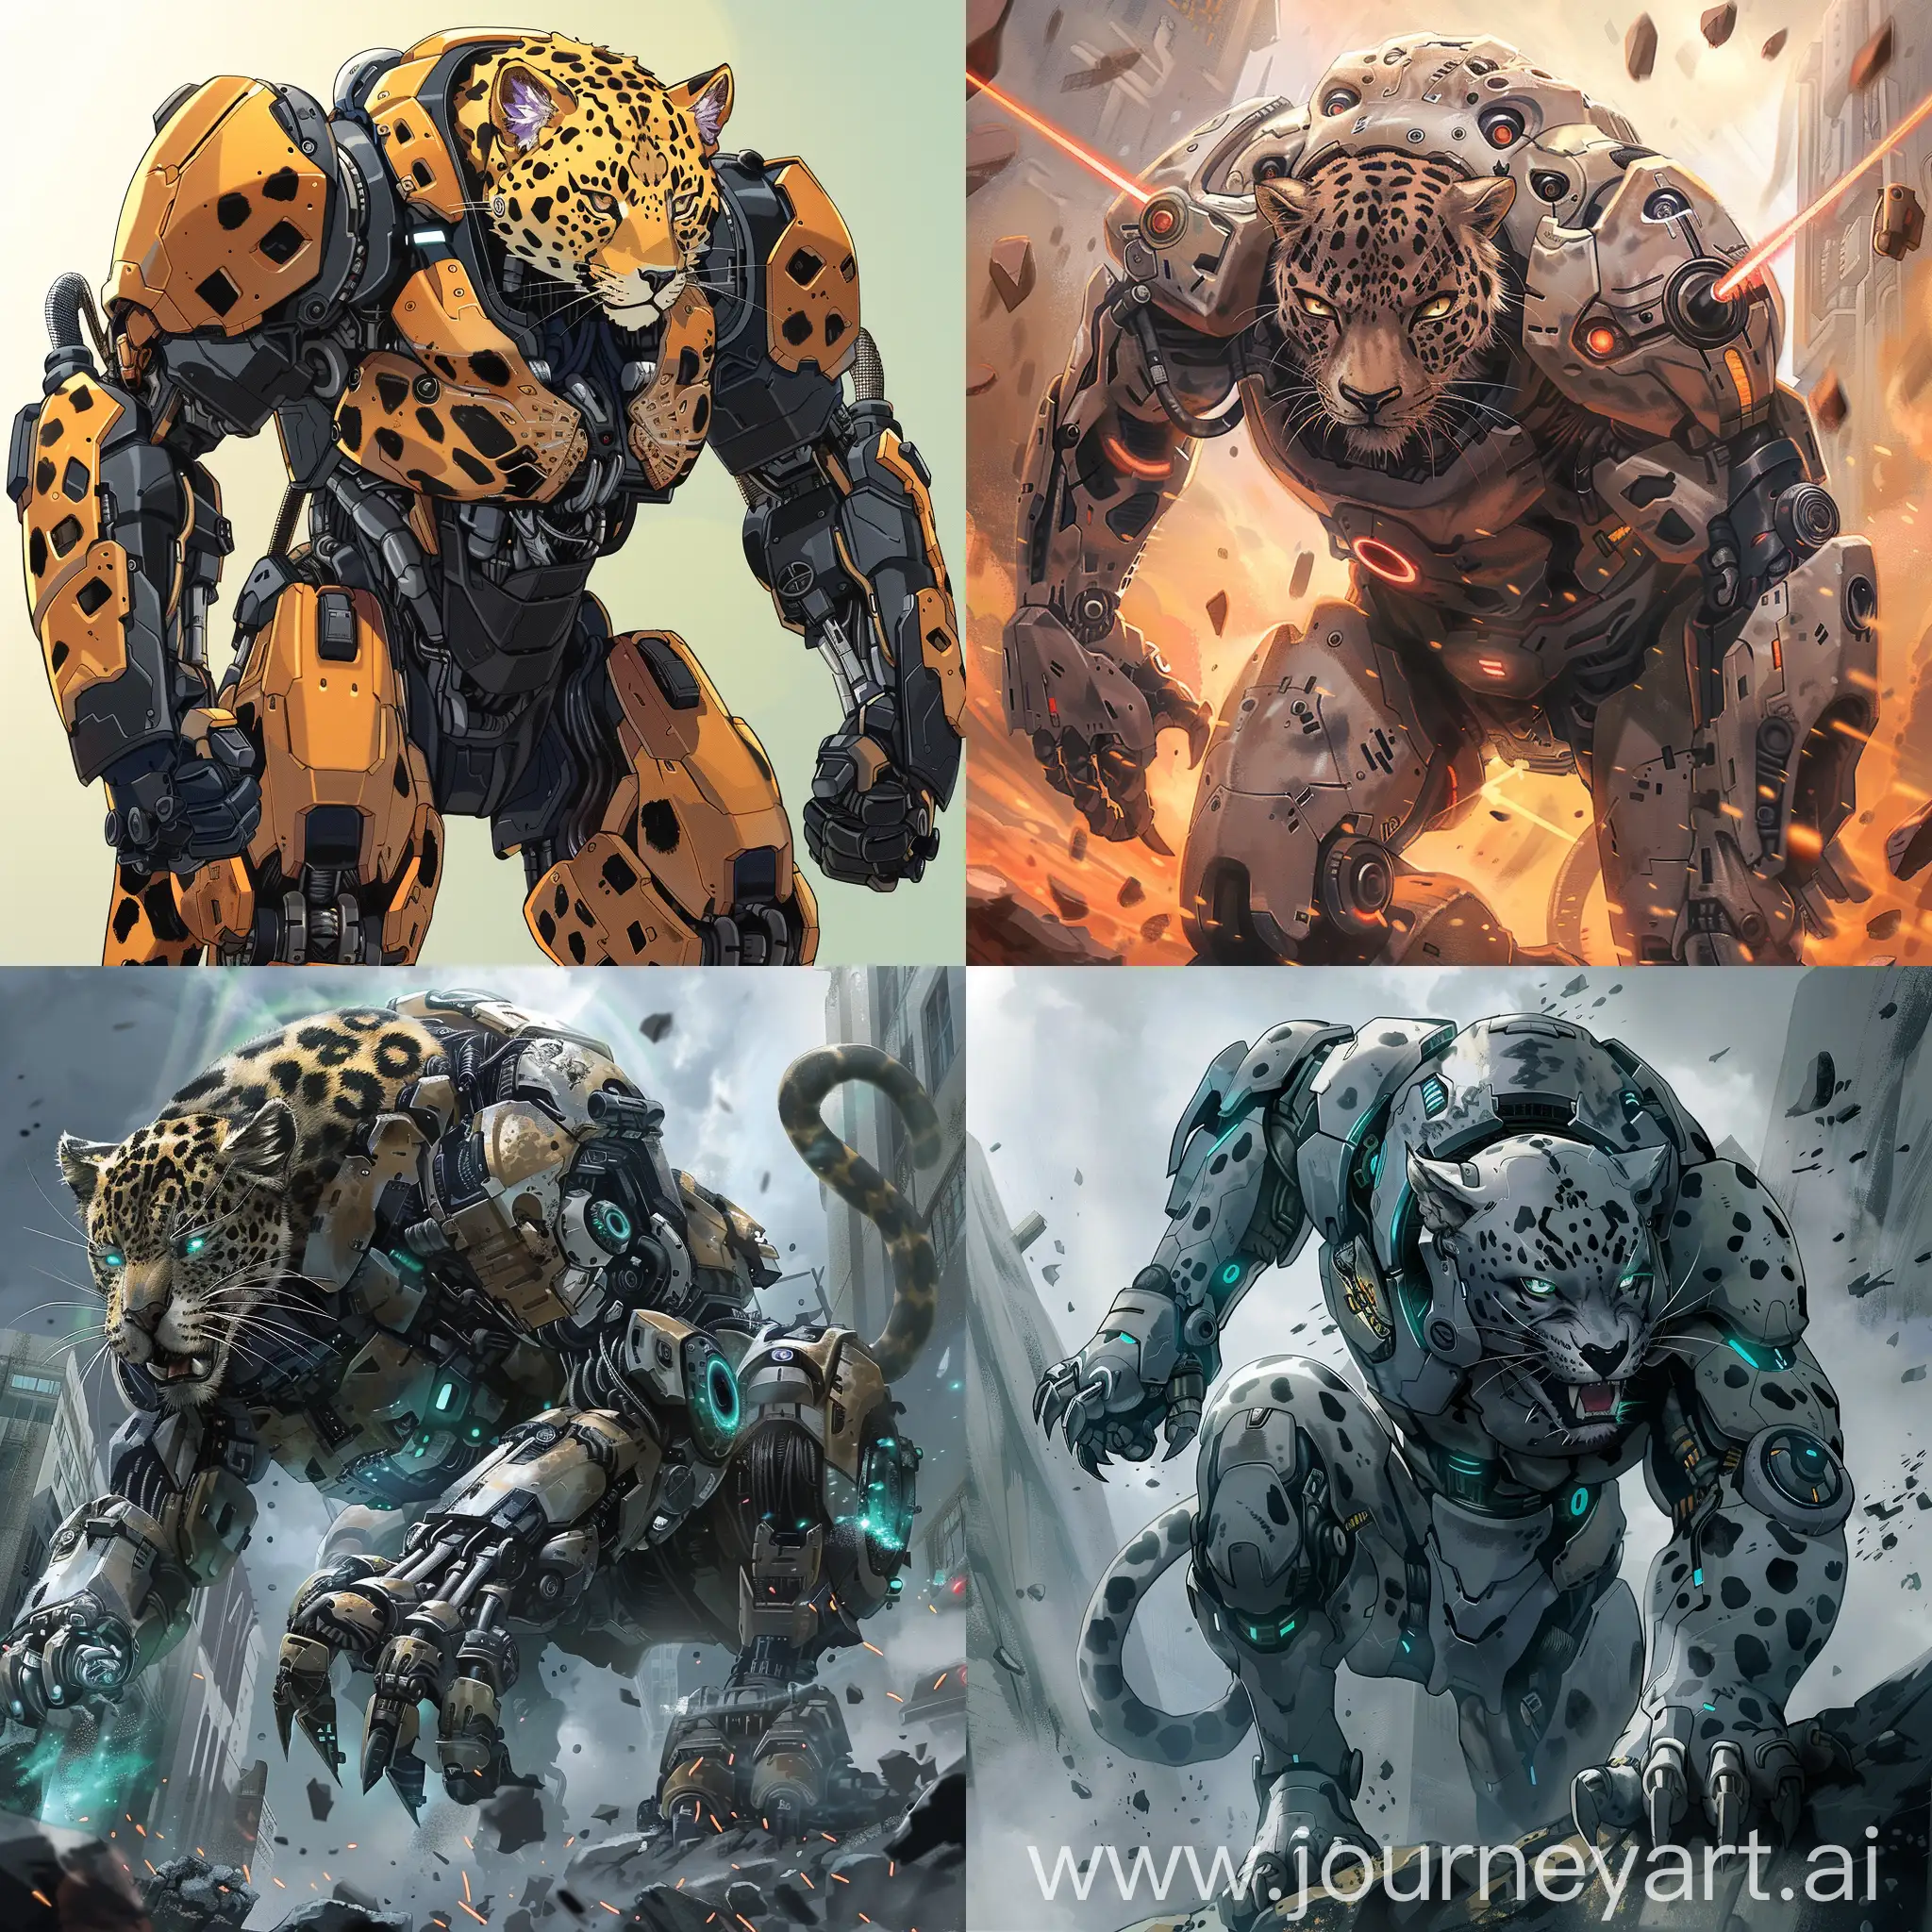 AnimeStyle-Terrifying-Armored-Leopard-Cyborg